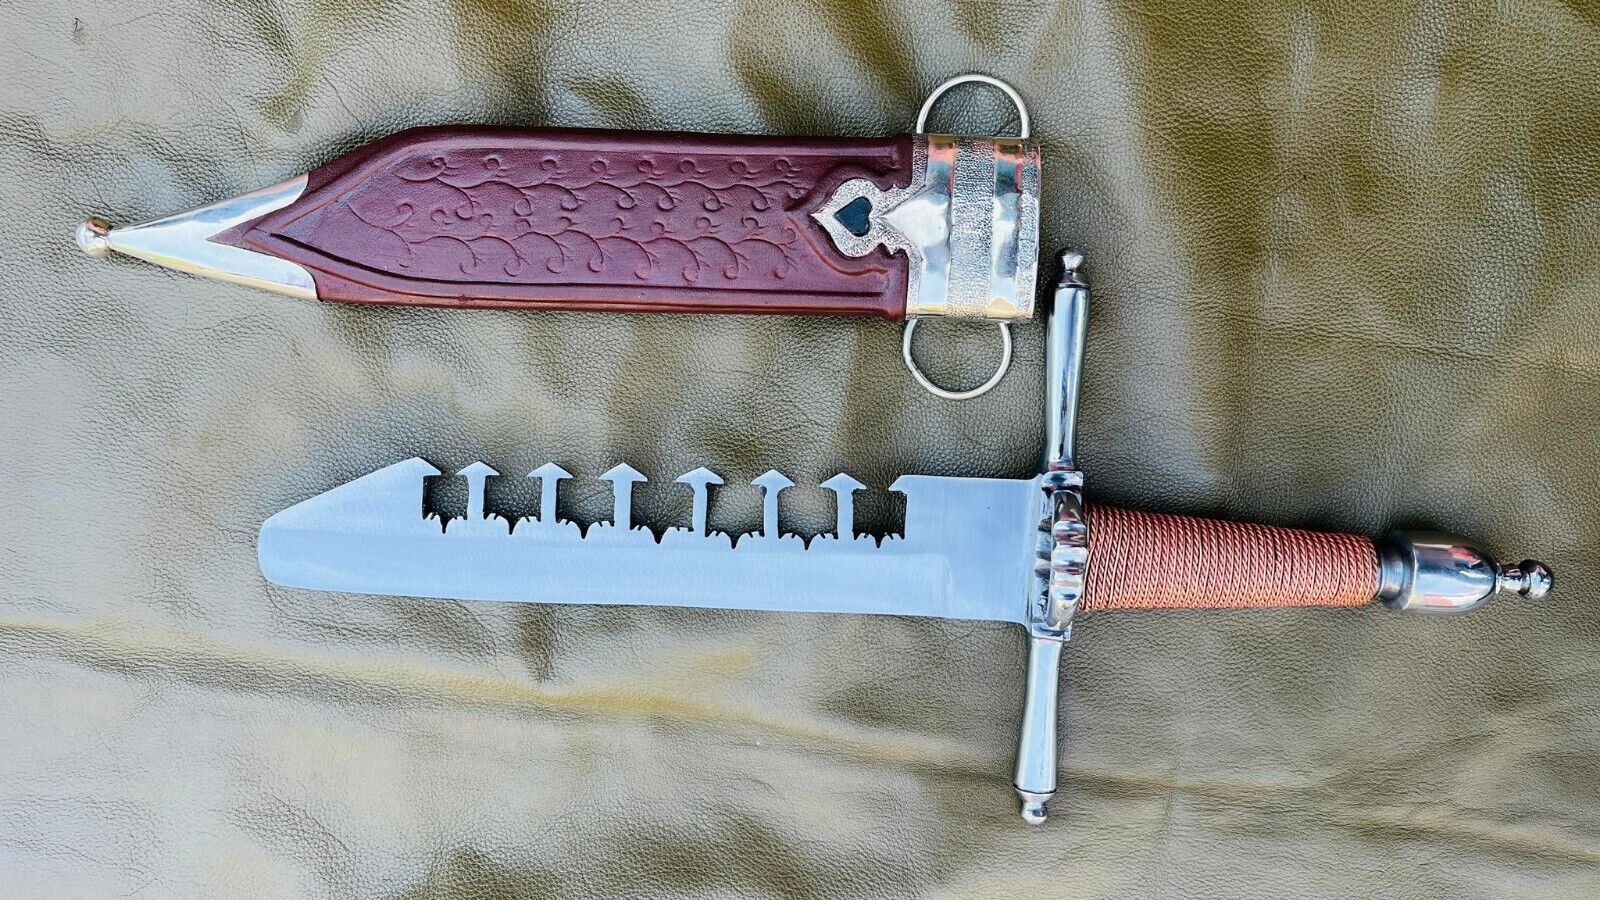 EGKH-11 Inches Sword Breaker dagger-unique blade style - Medieval replica dagger